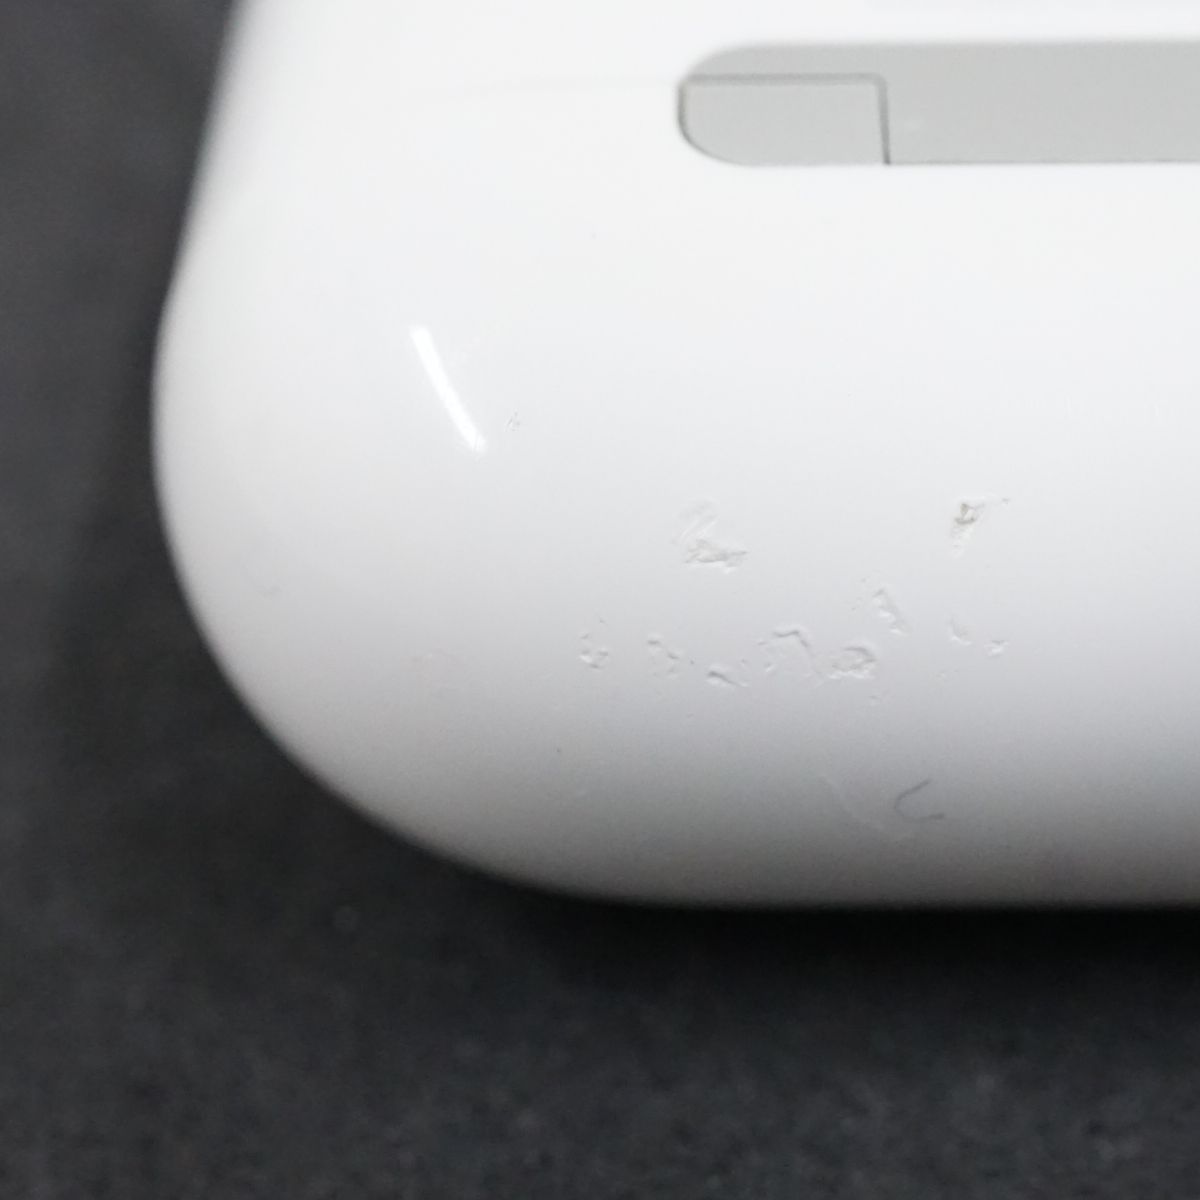 Apple AirPods 第三世代 MagSafe充電ケース付 USED品 ワイヤレス